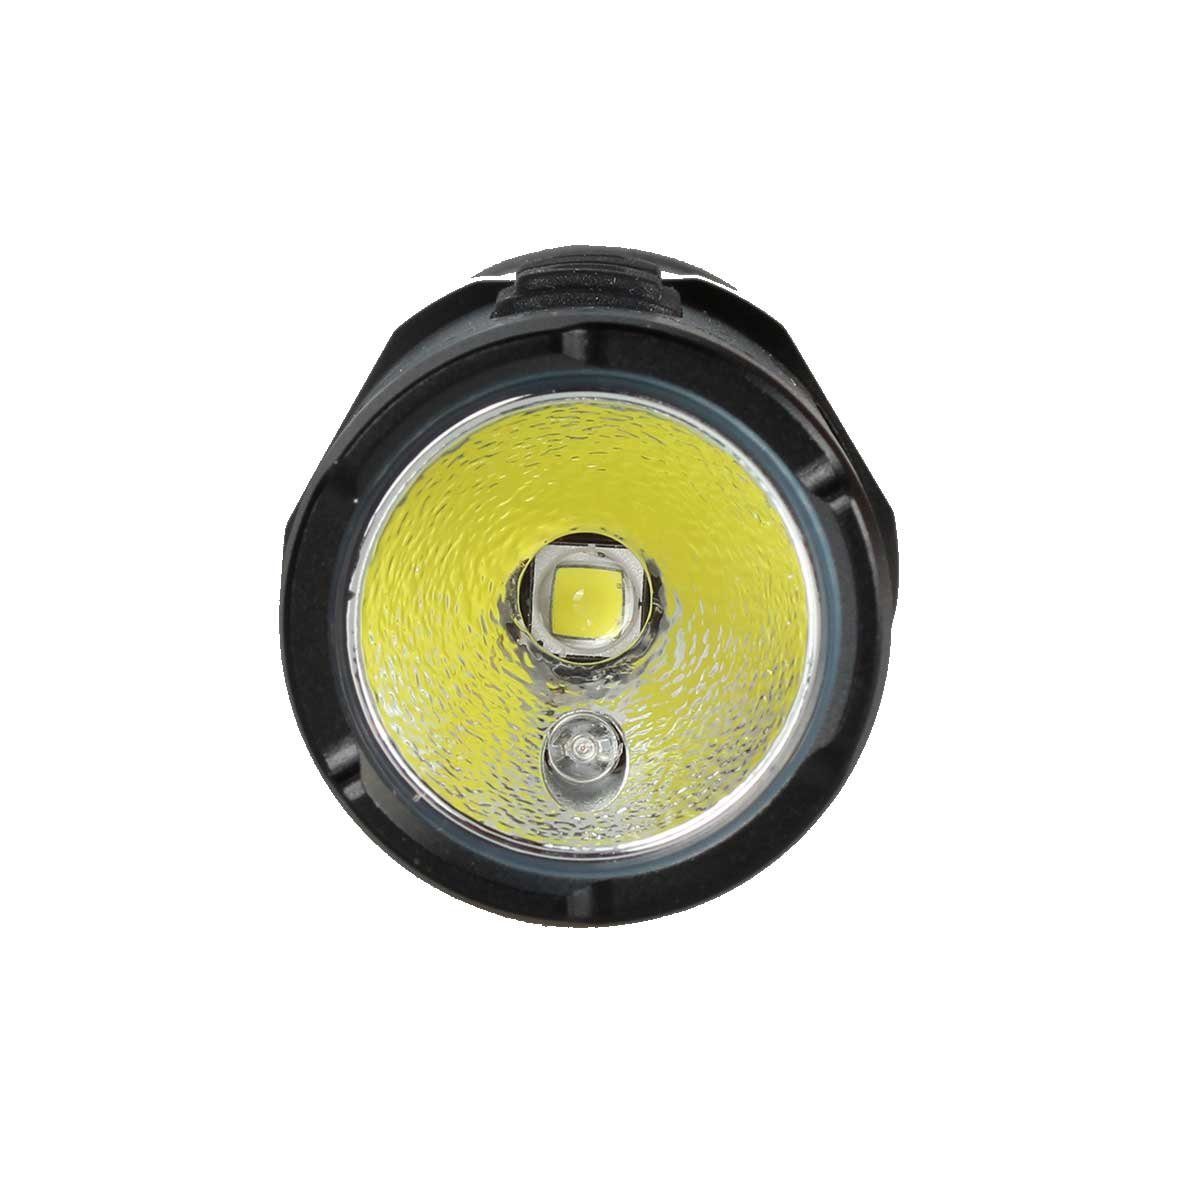 Taschenlampe Nitecore MT10C LED LED Taschenlampe